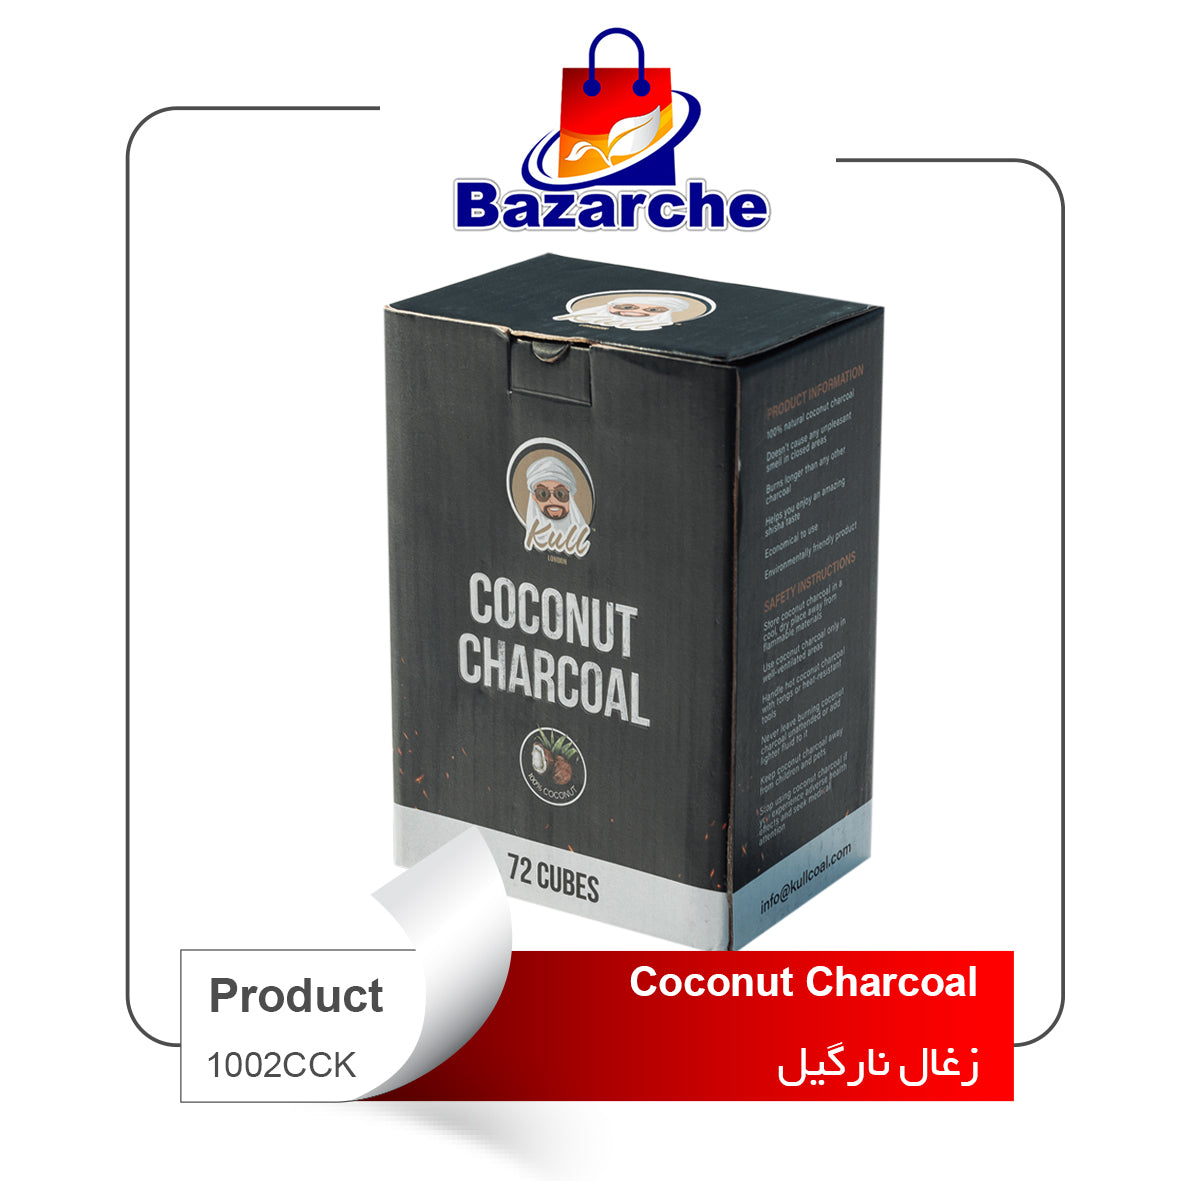 Coconut charcoal